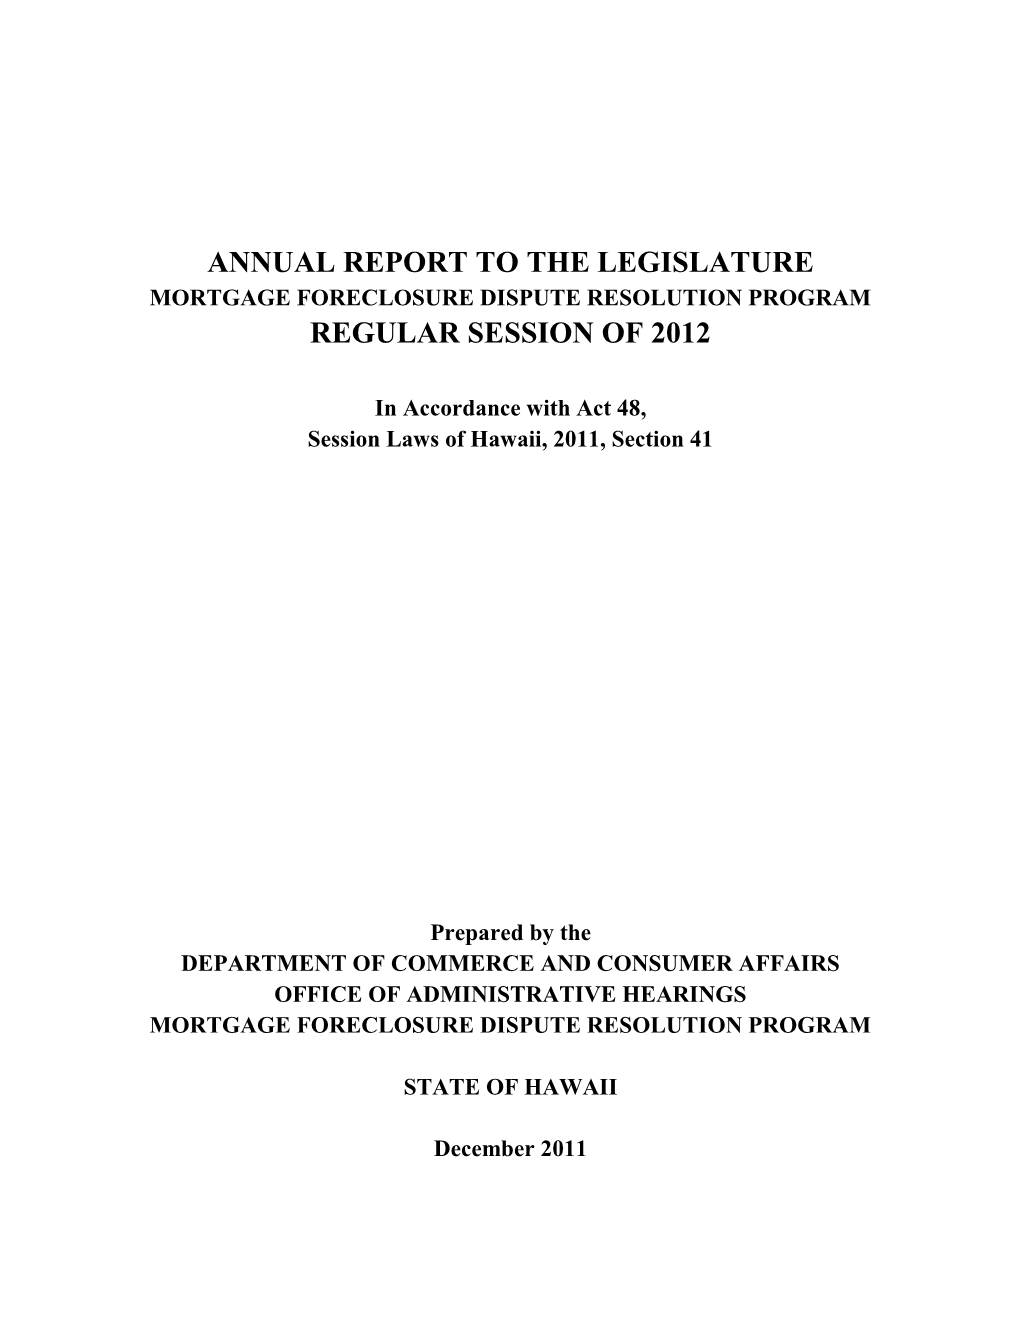 2011 Mortgage Foreclosure Dispute Resolution Program Annual Report